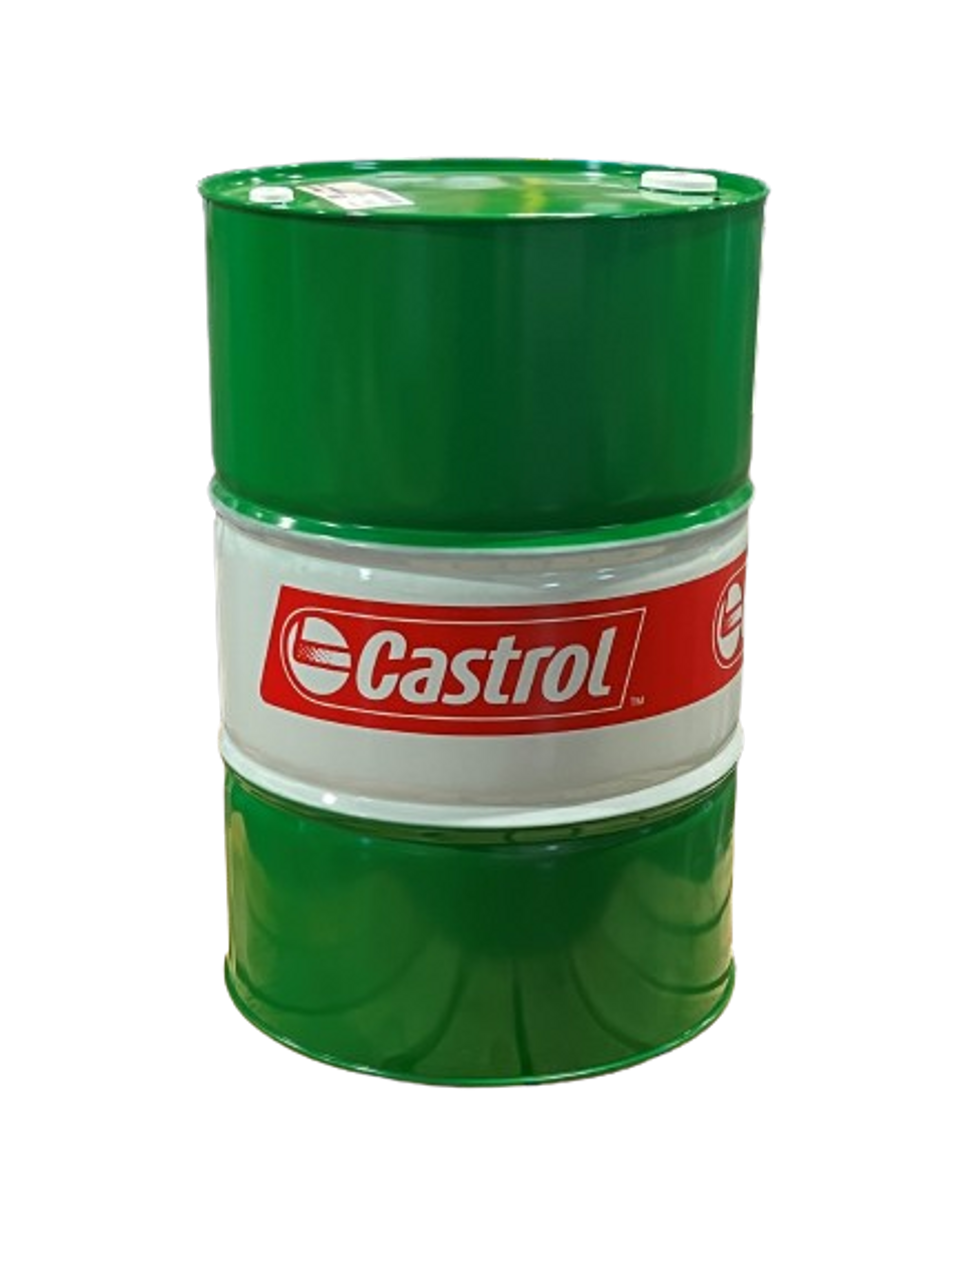 Castrol Molub-Alloy 6040/460-1 1/2 400 LB Drum